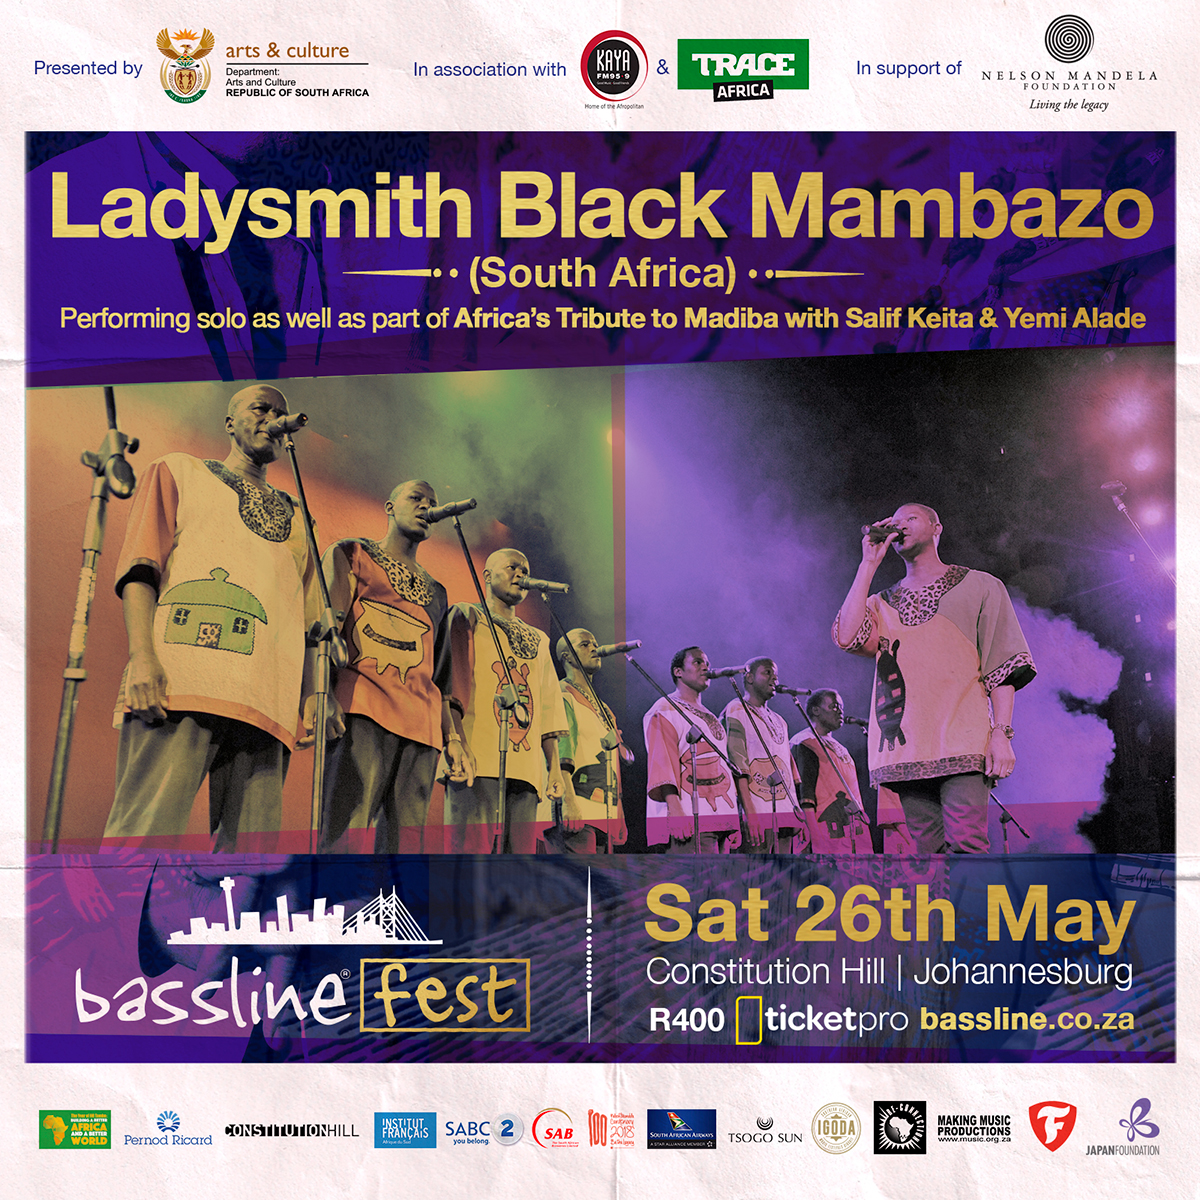 Bassline Fest Lady Smith Black Mambazo: New addition to stellar line up